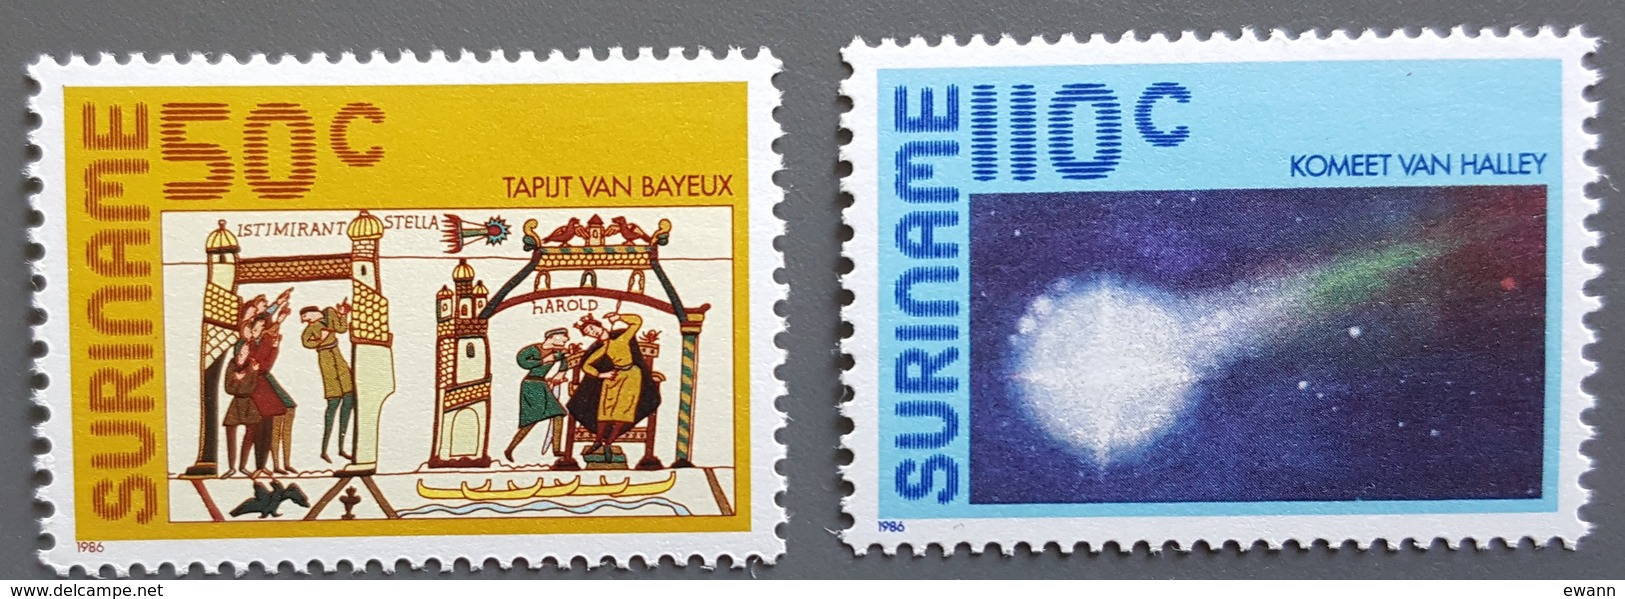 Surinam - YT N°1038, 1039 - Passage De La Comète De Halley / Espace - 1986 - Neufs - Surinam